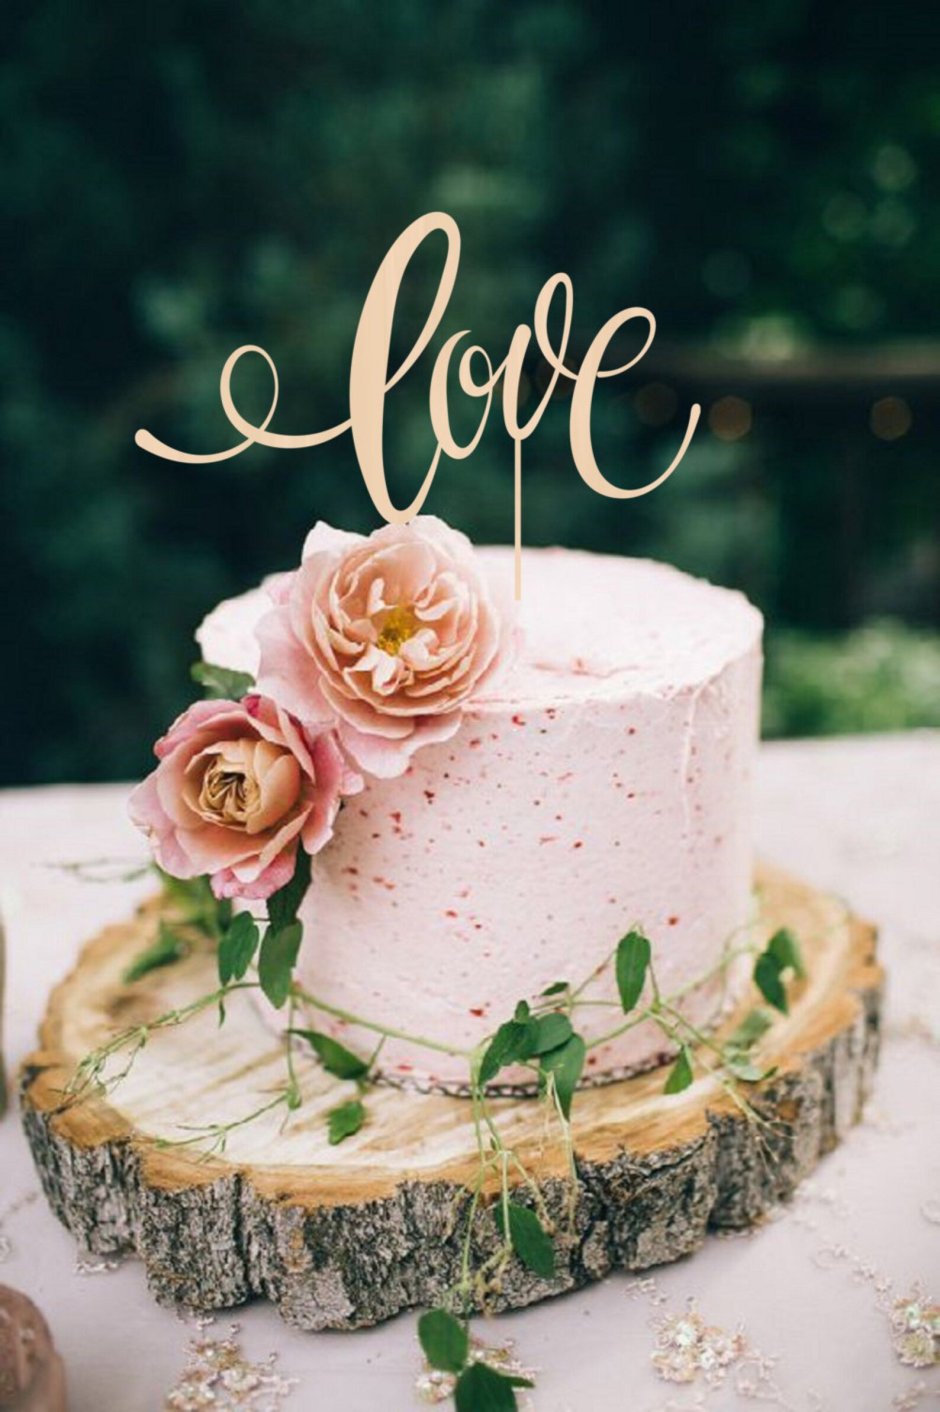 Топпер на свадебный торт фото